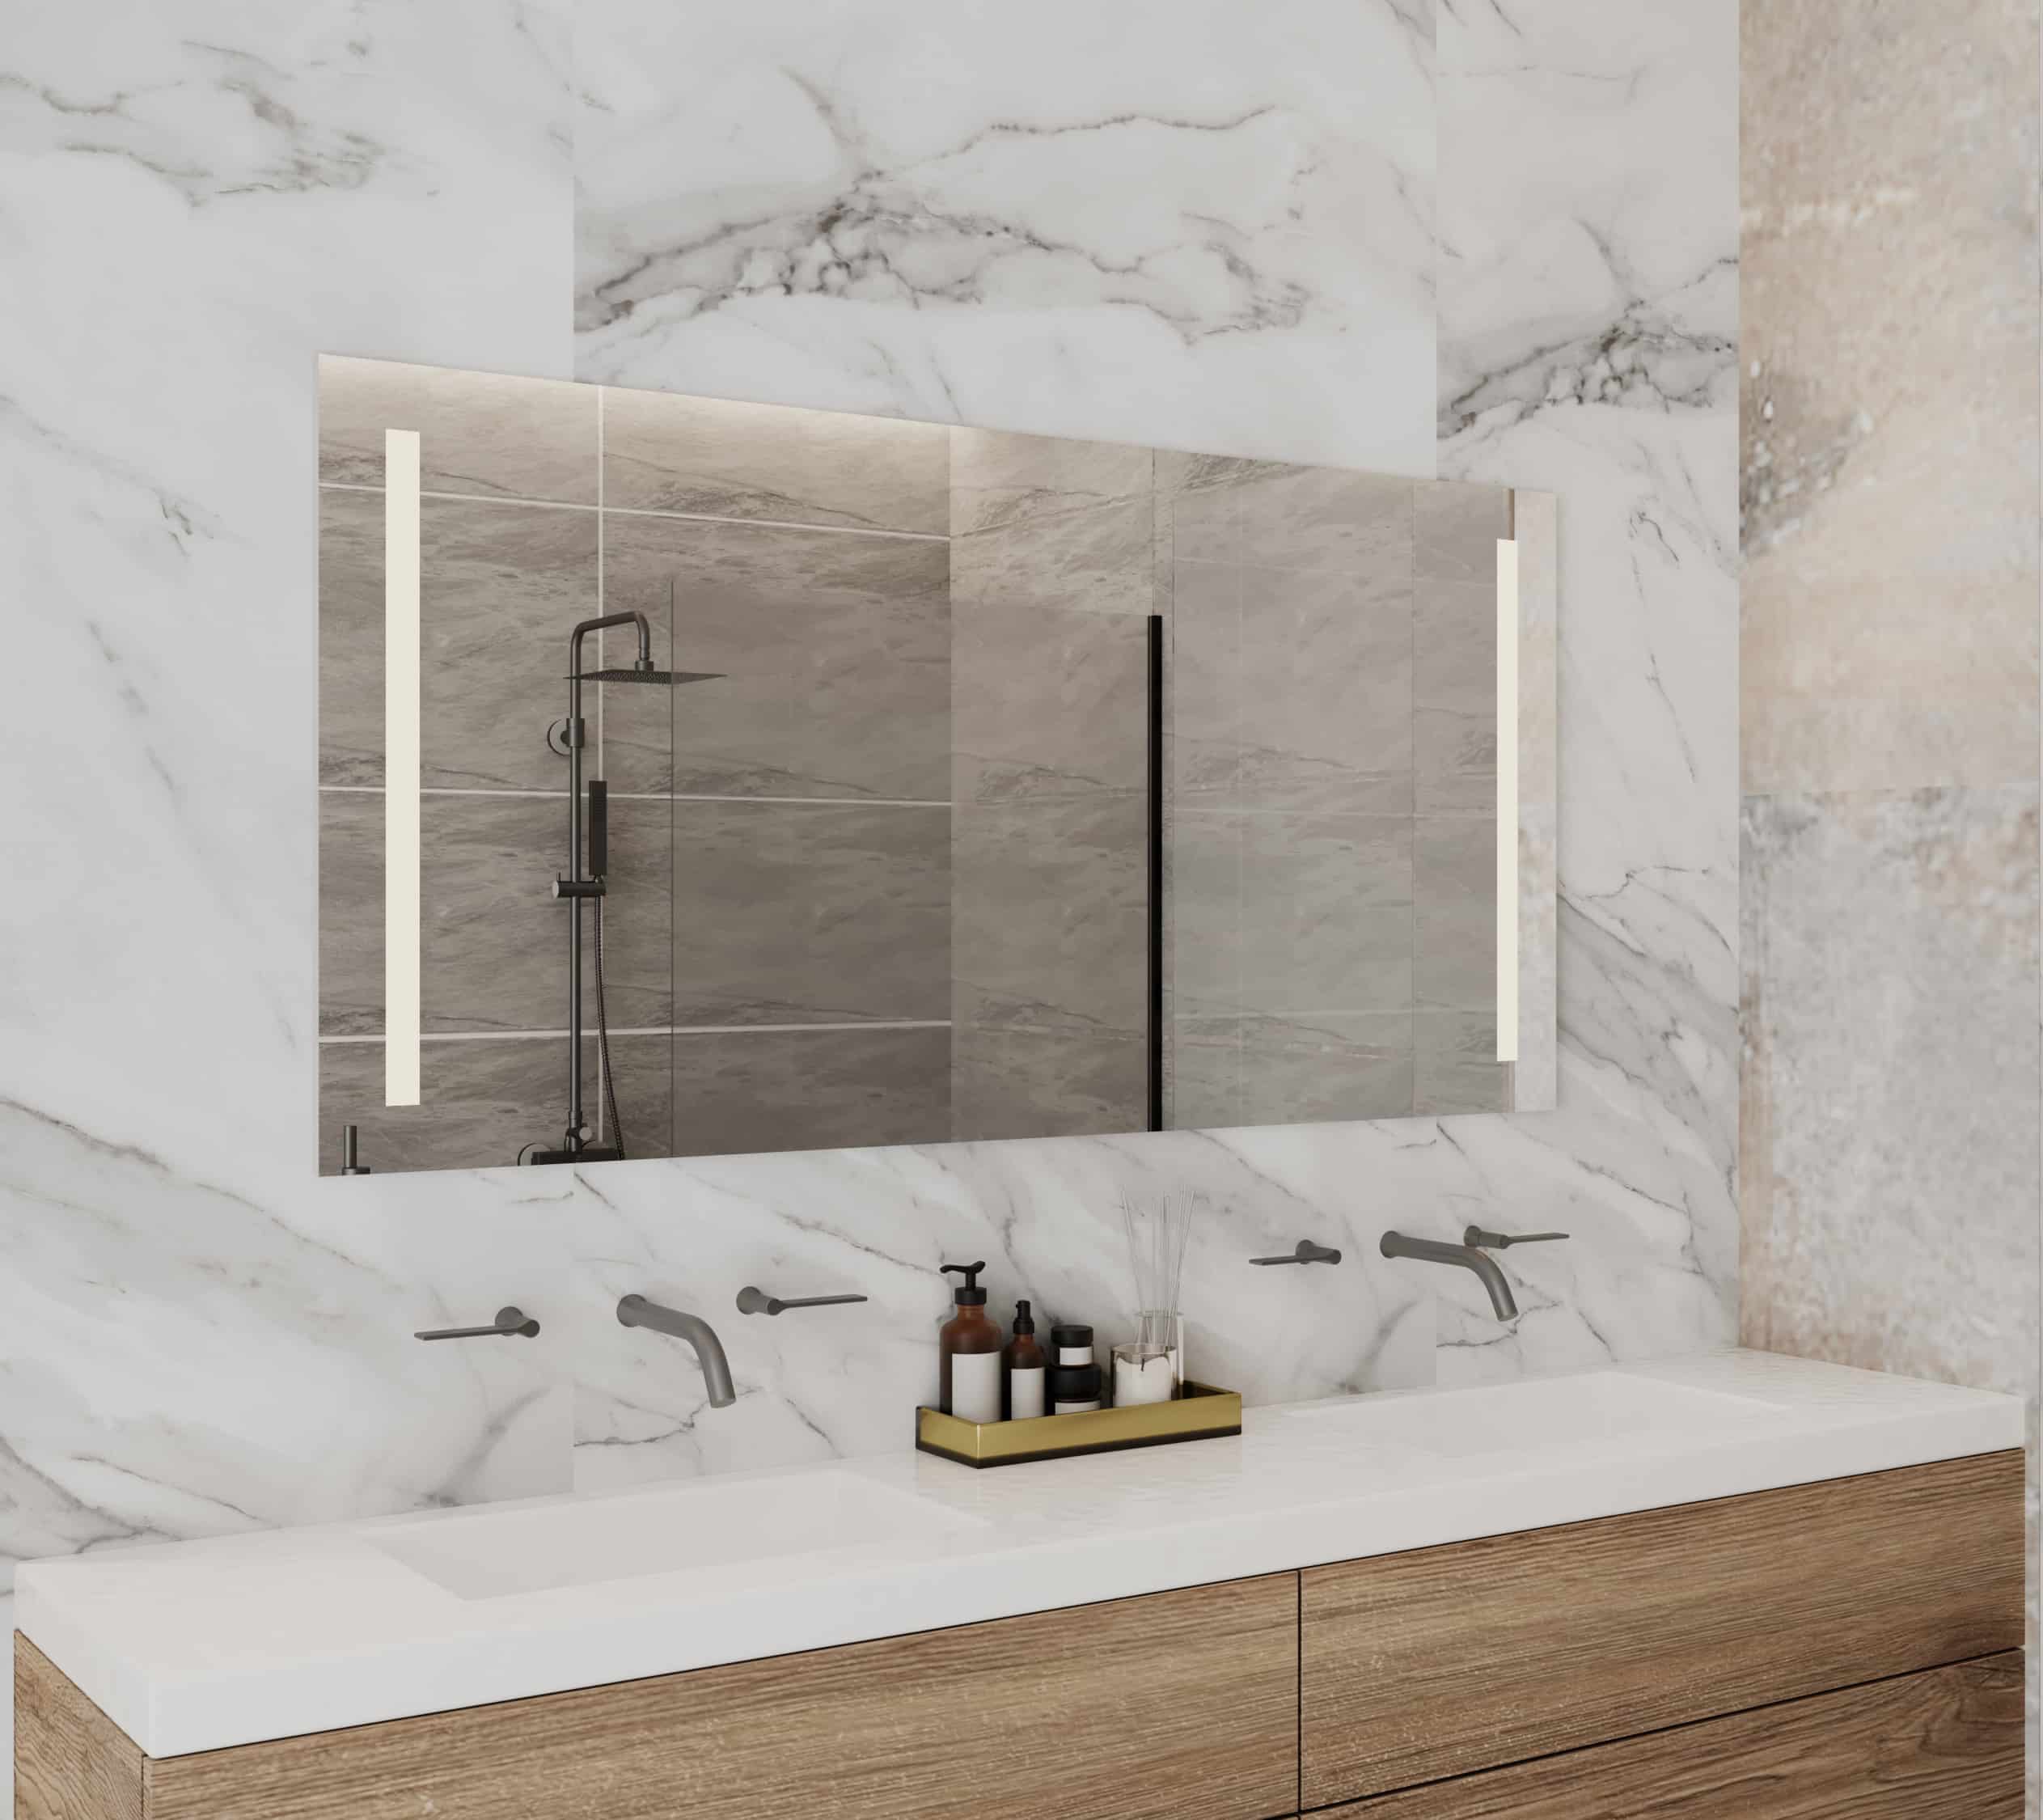 Deze badkamer spiegel is 120 cm breed, 60 cm hoog en slechts 3 cm breed